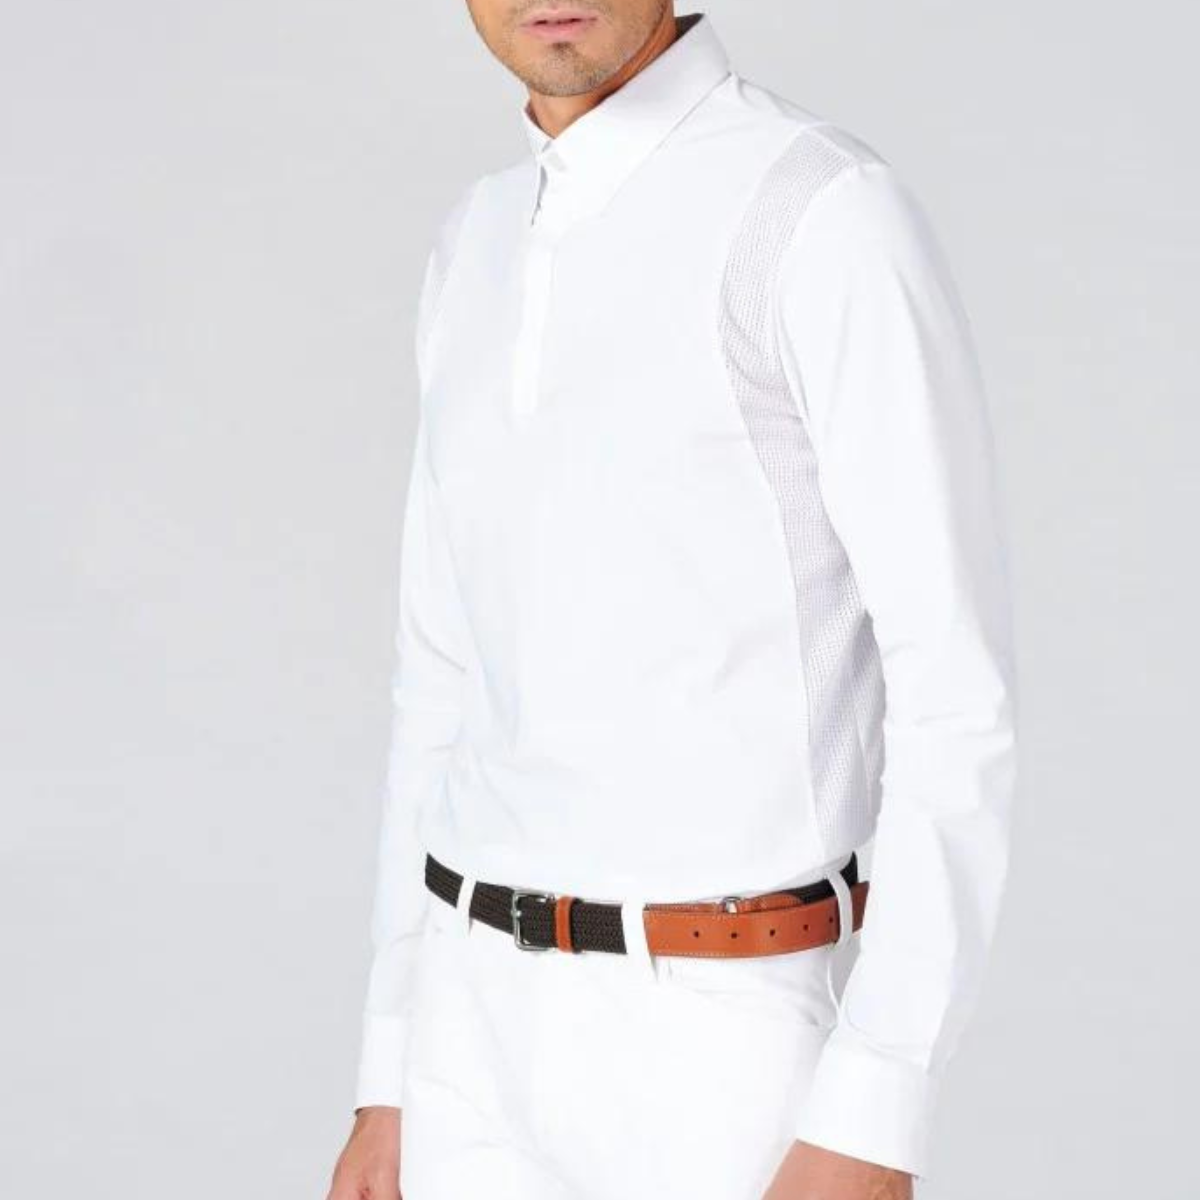 Vestrum Wells Long Sleeve Show Shirt in White - Men's Large